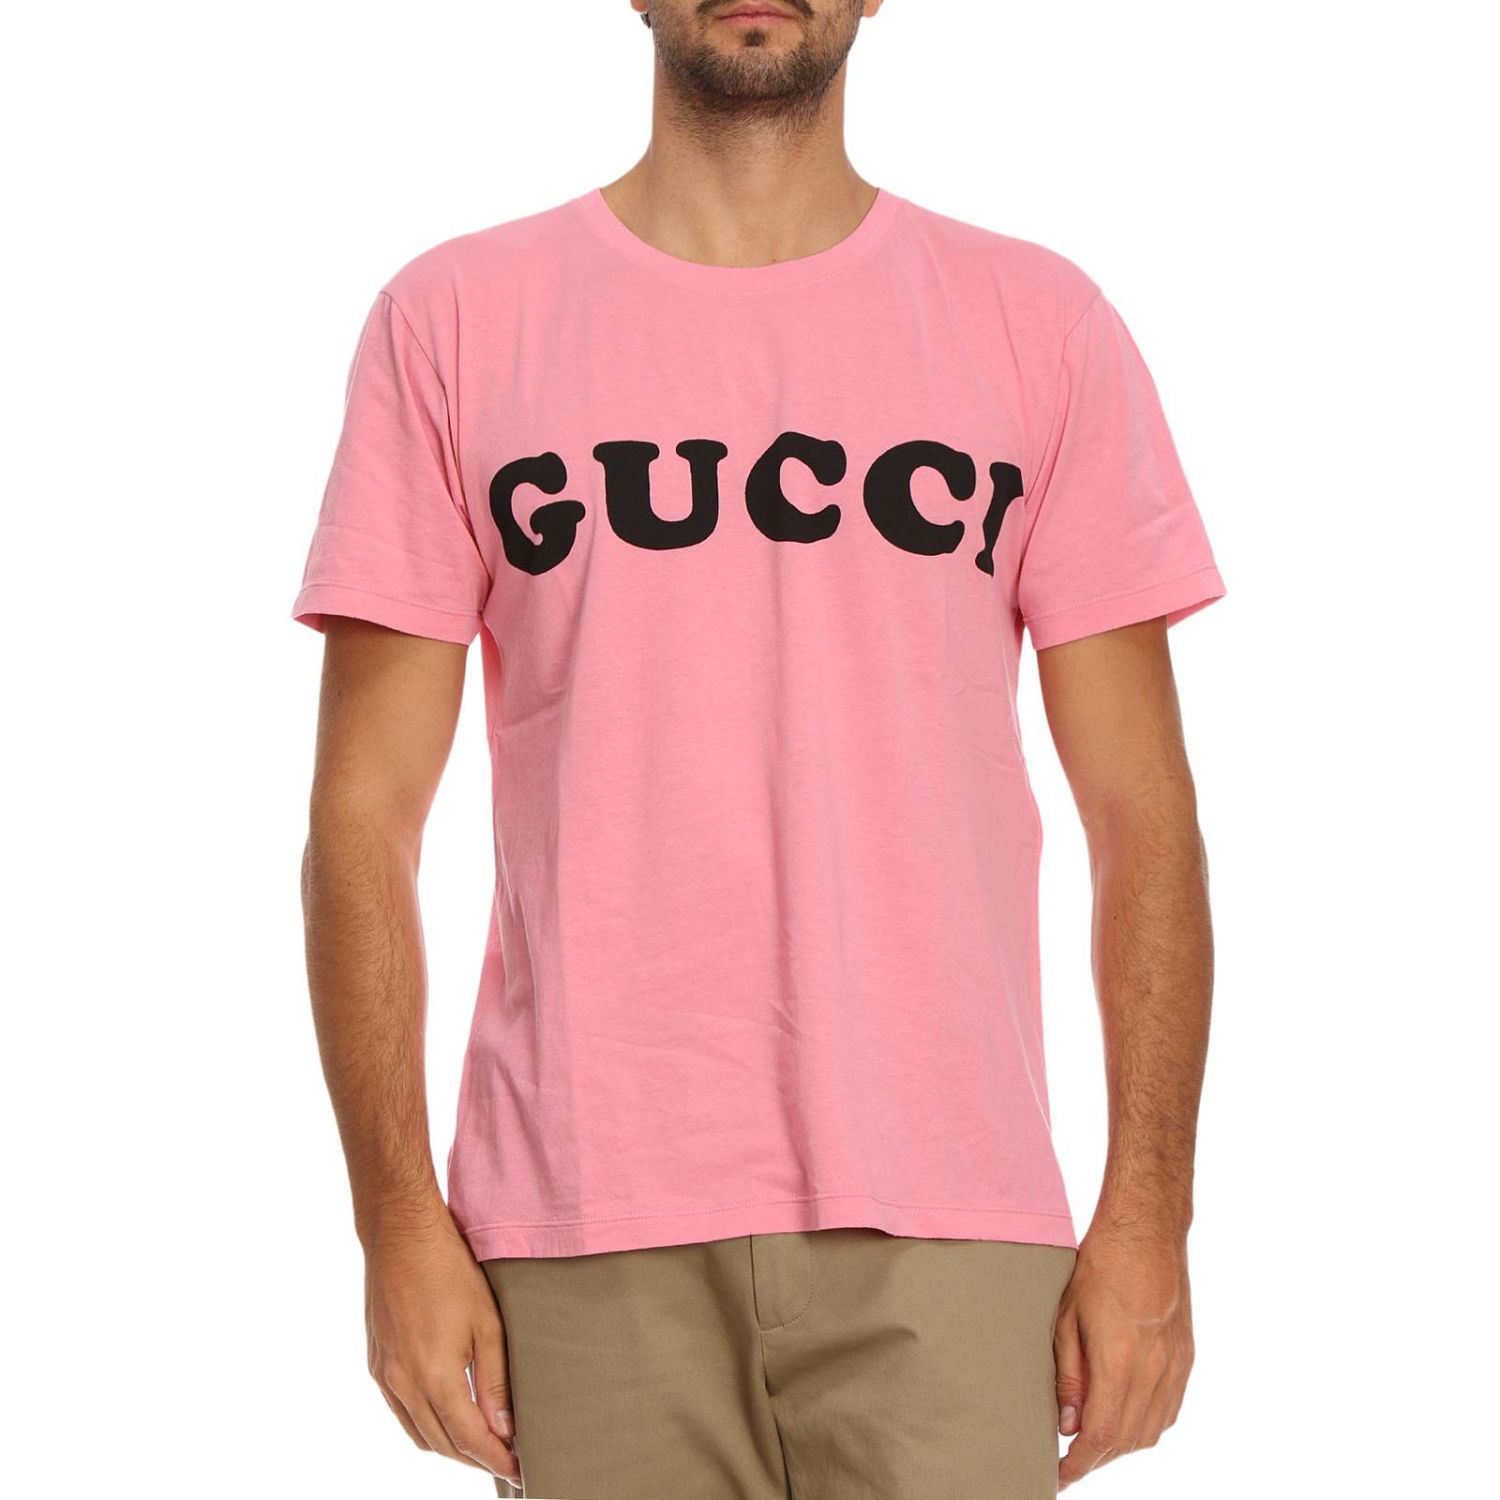 gucci t shirt pink